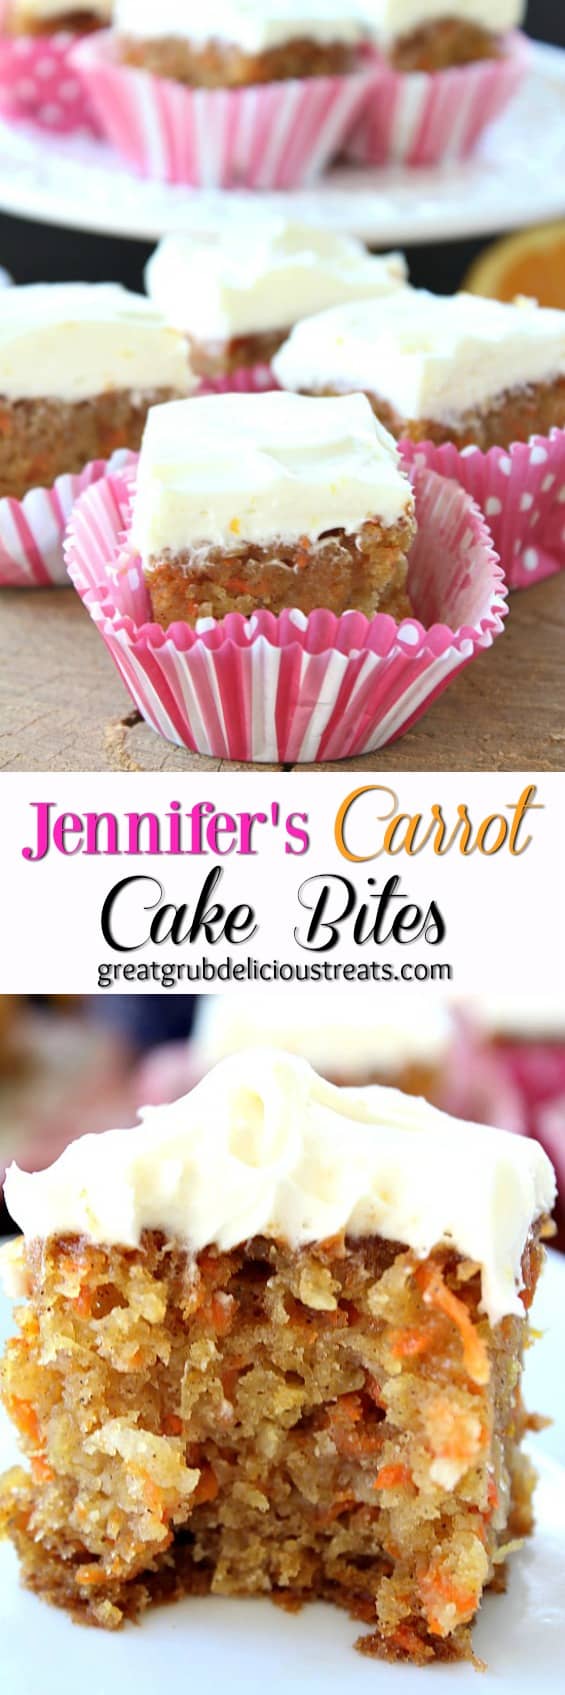 Jennifer's Carrot Cake Bites